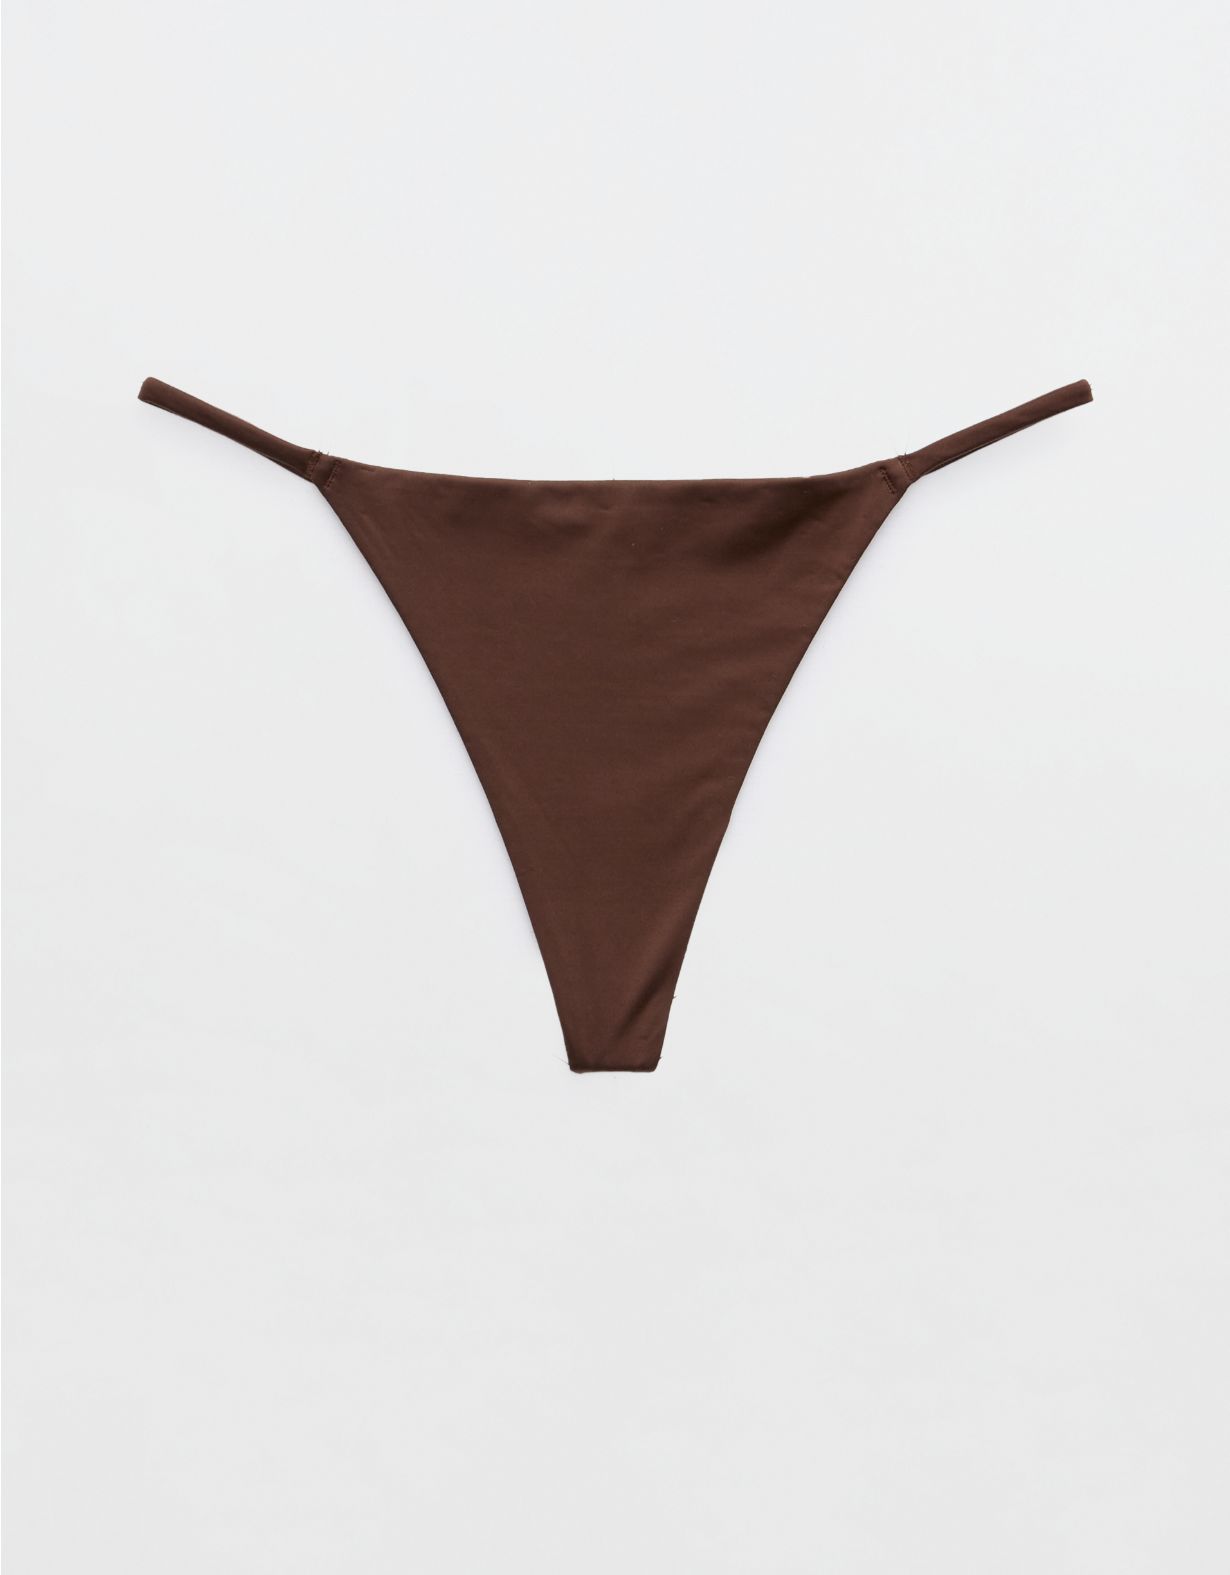 SMOOTHEZ Shine String Thong Underwear